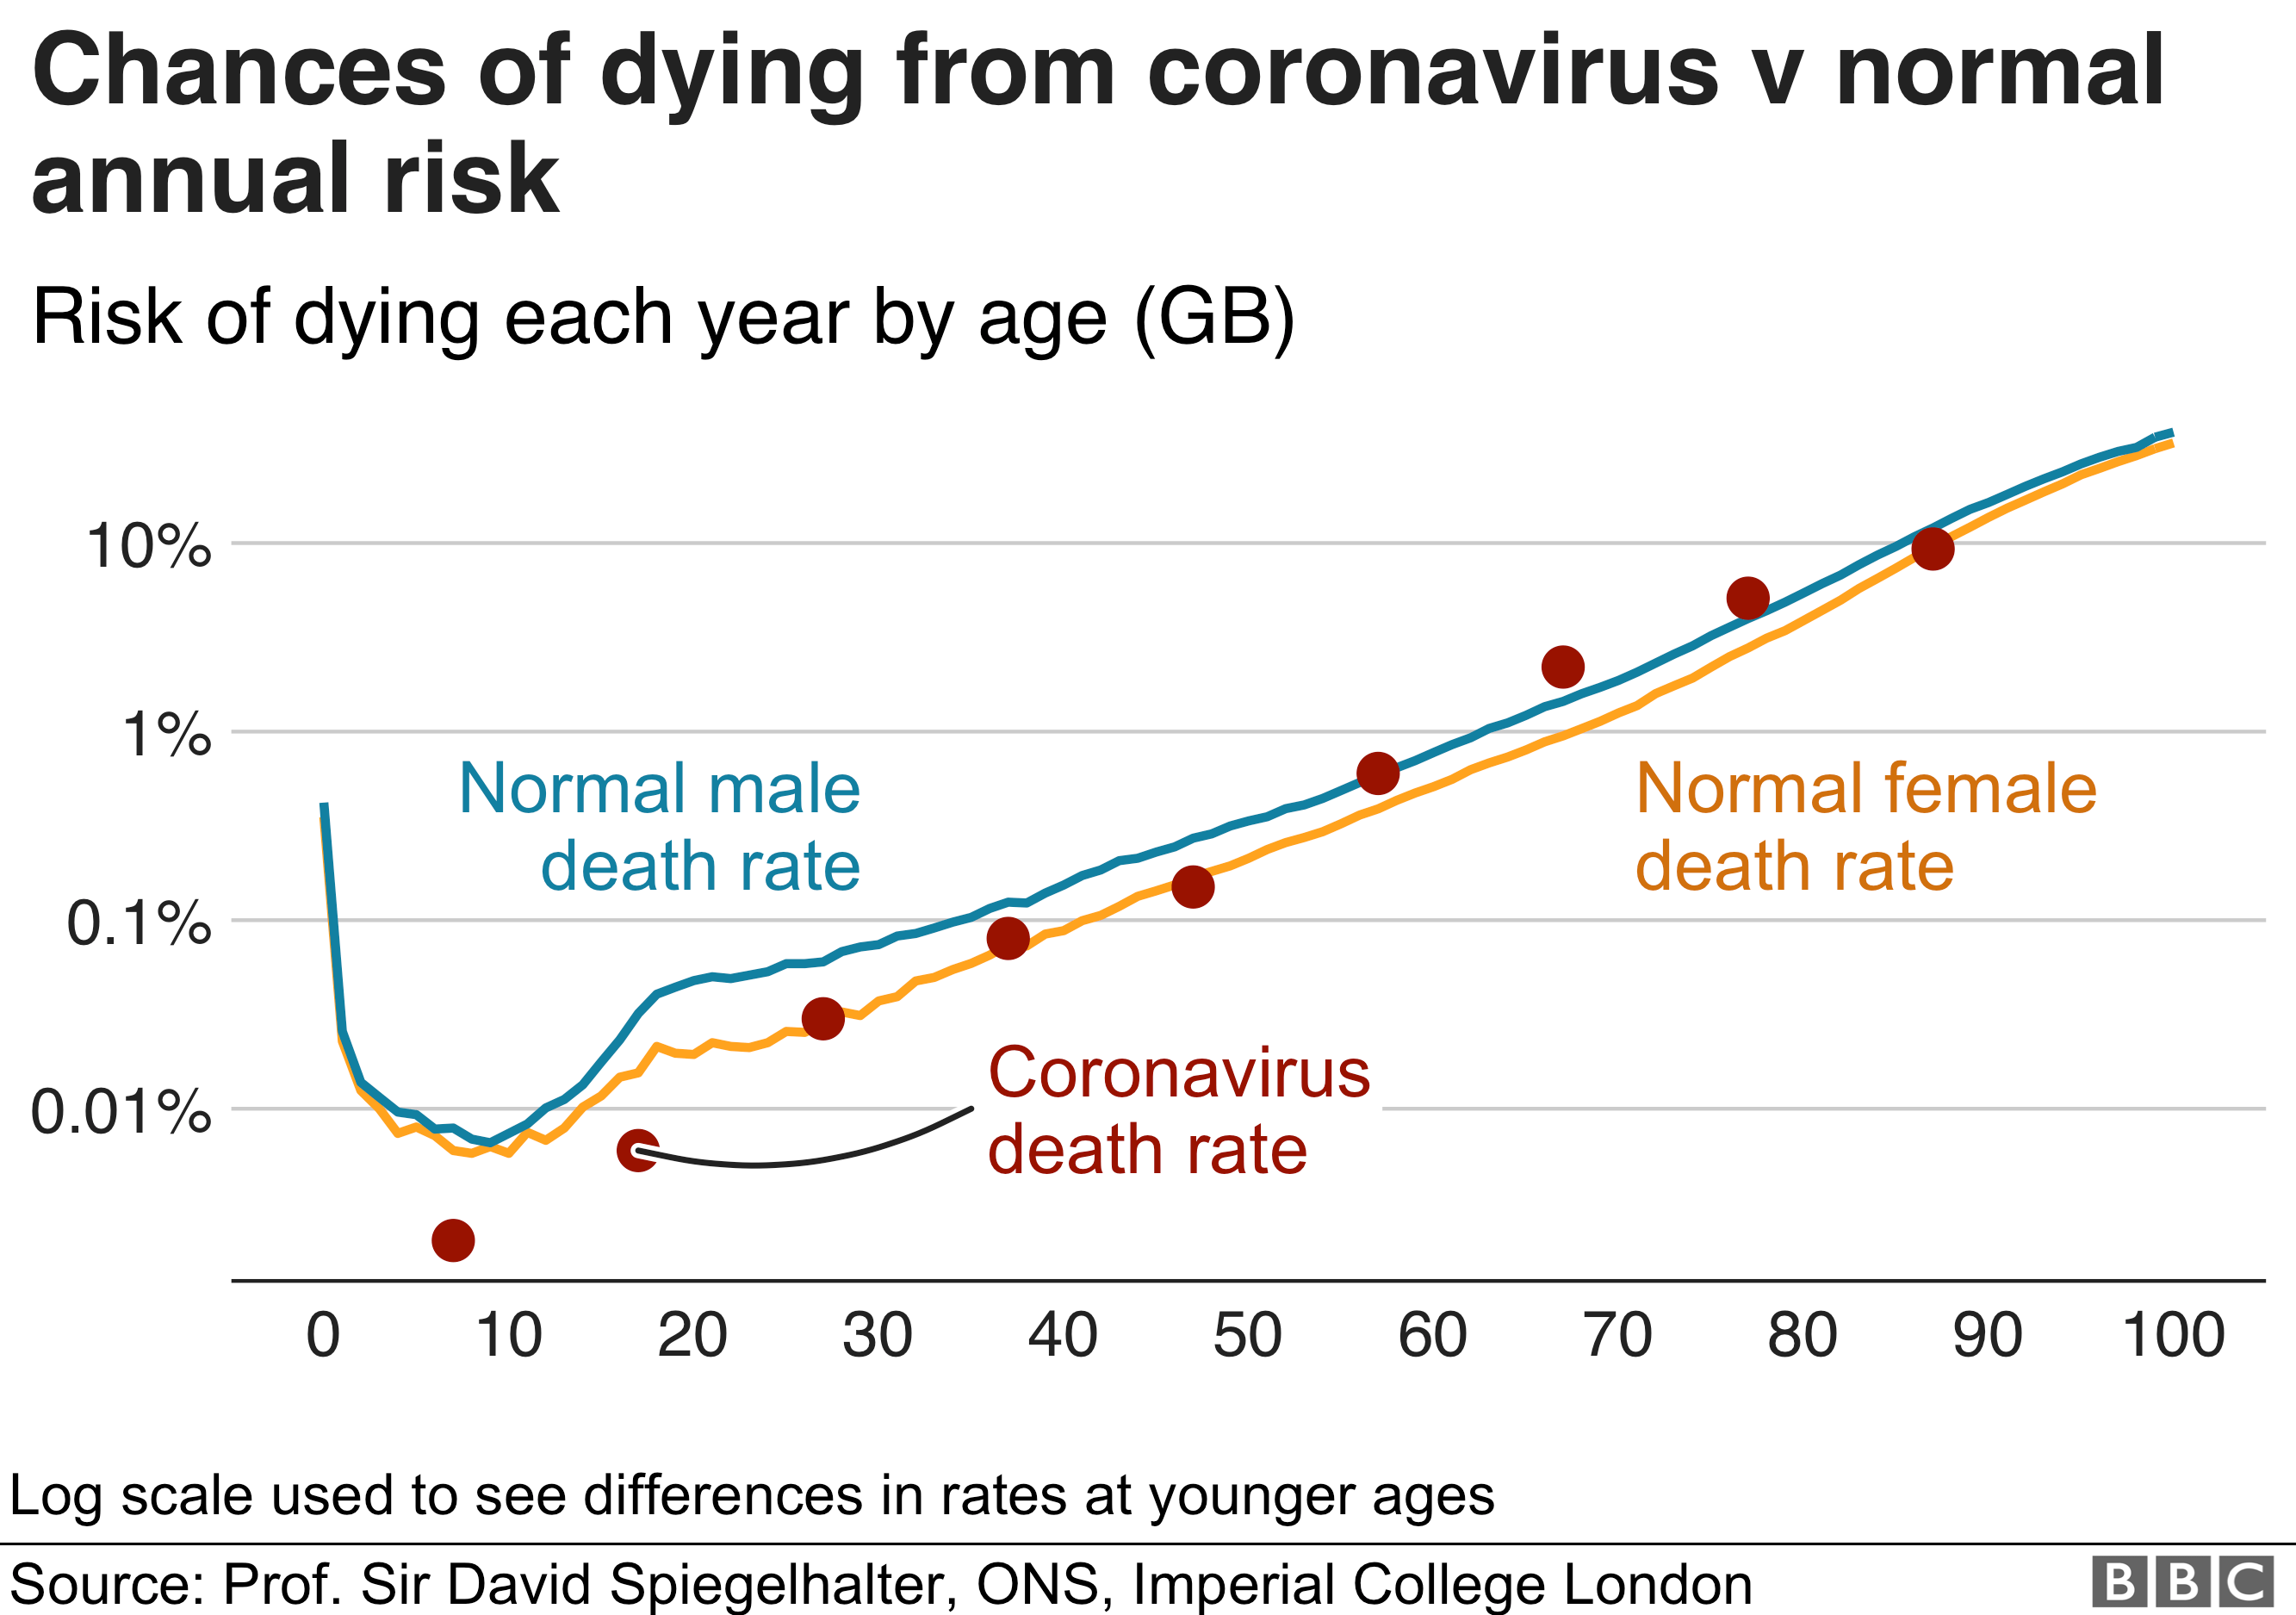 Chances of dying from coronavirus vs normal risk